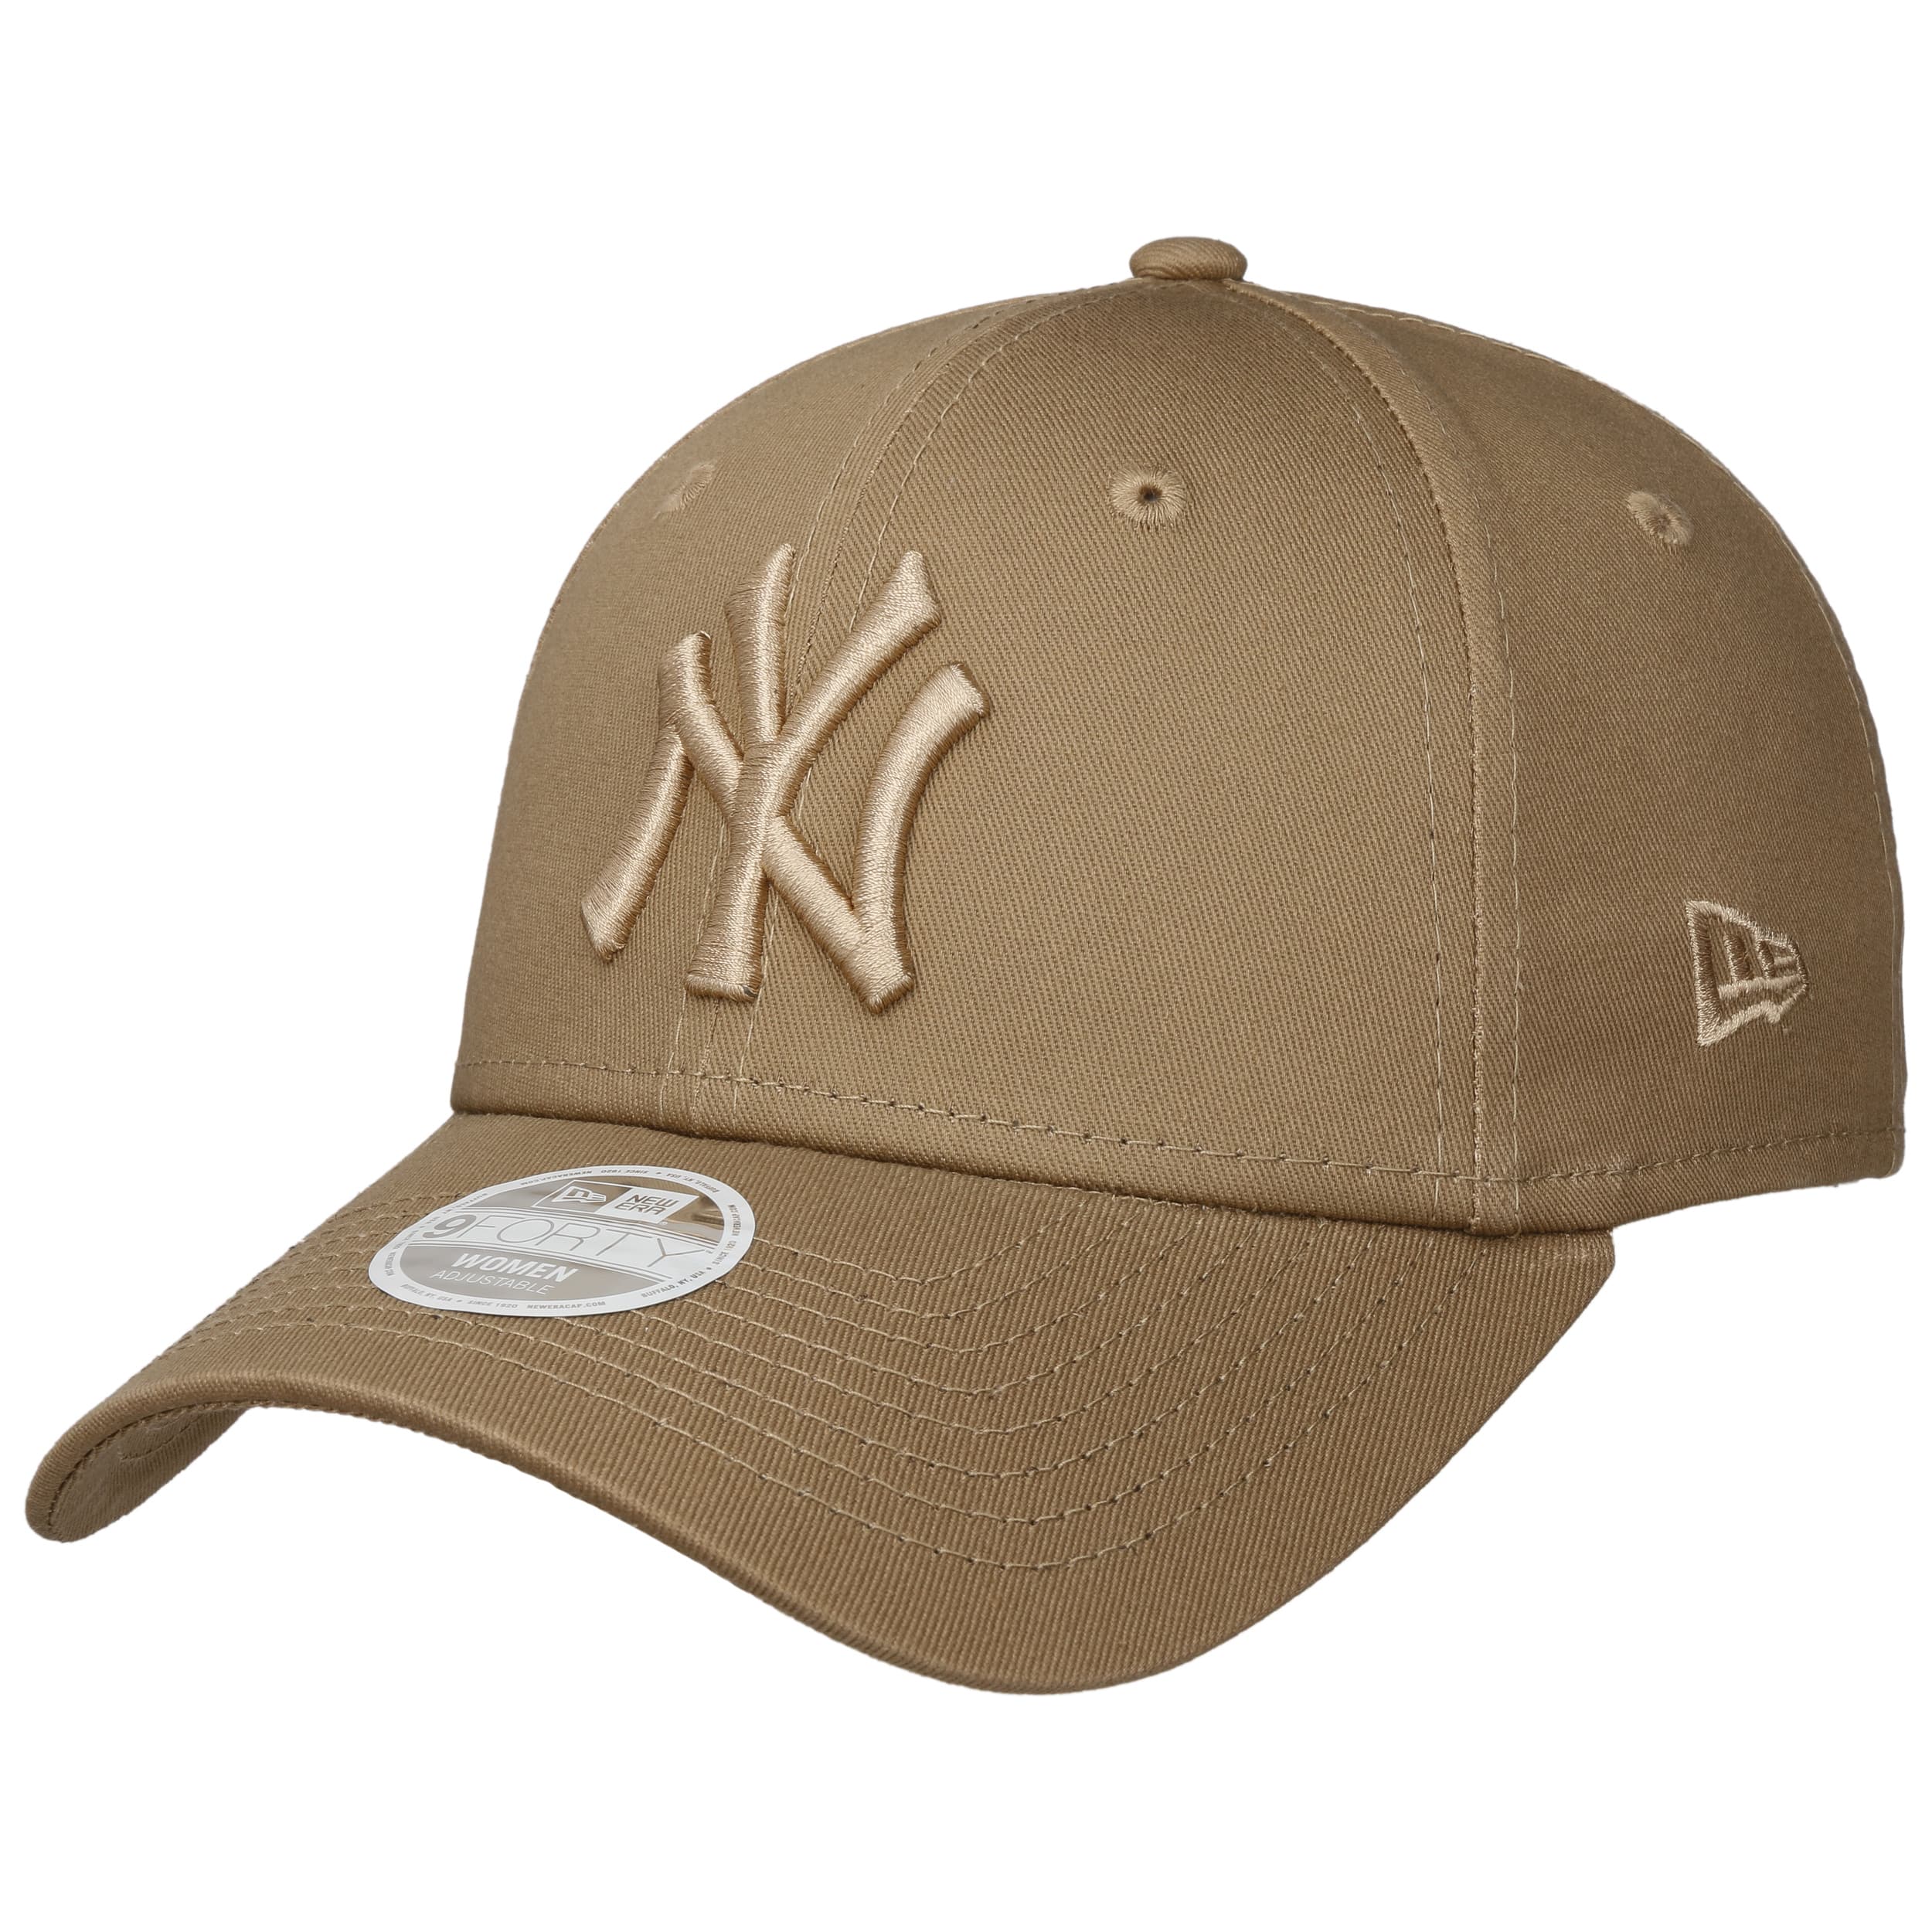 style women's new york yankees hat